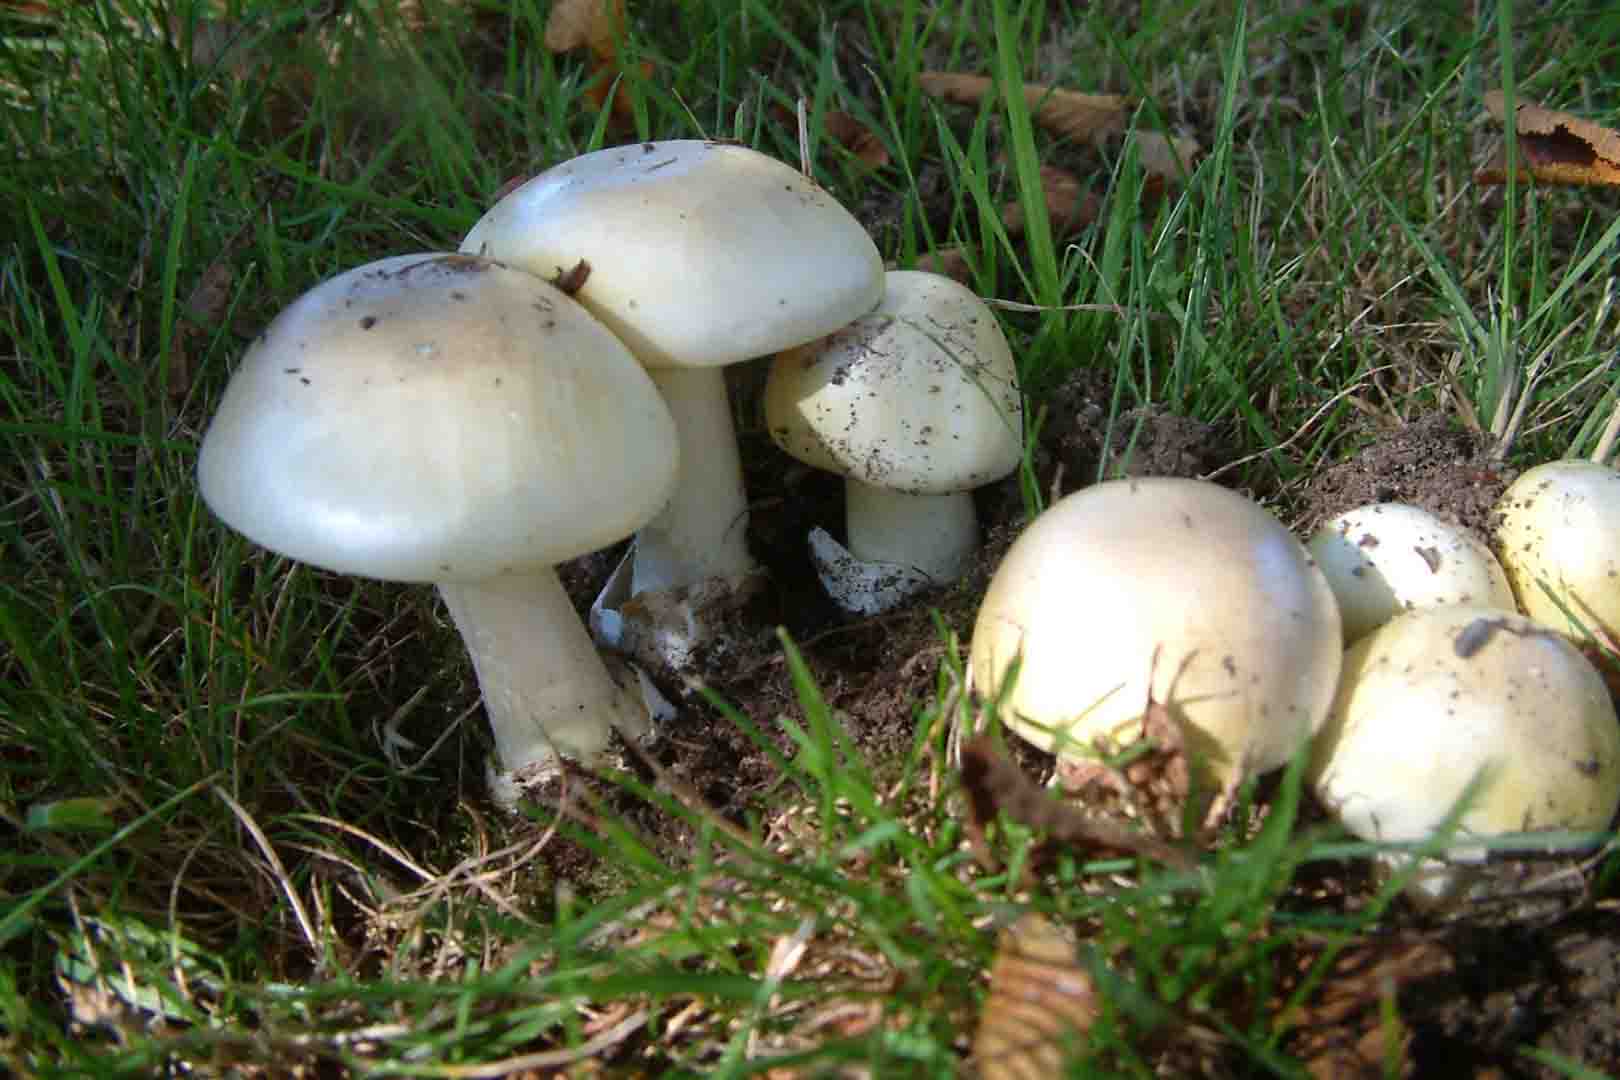 Mushrooms on ground